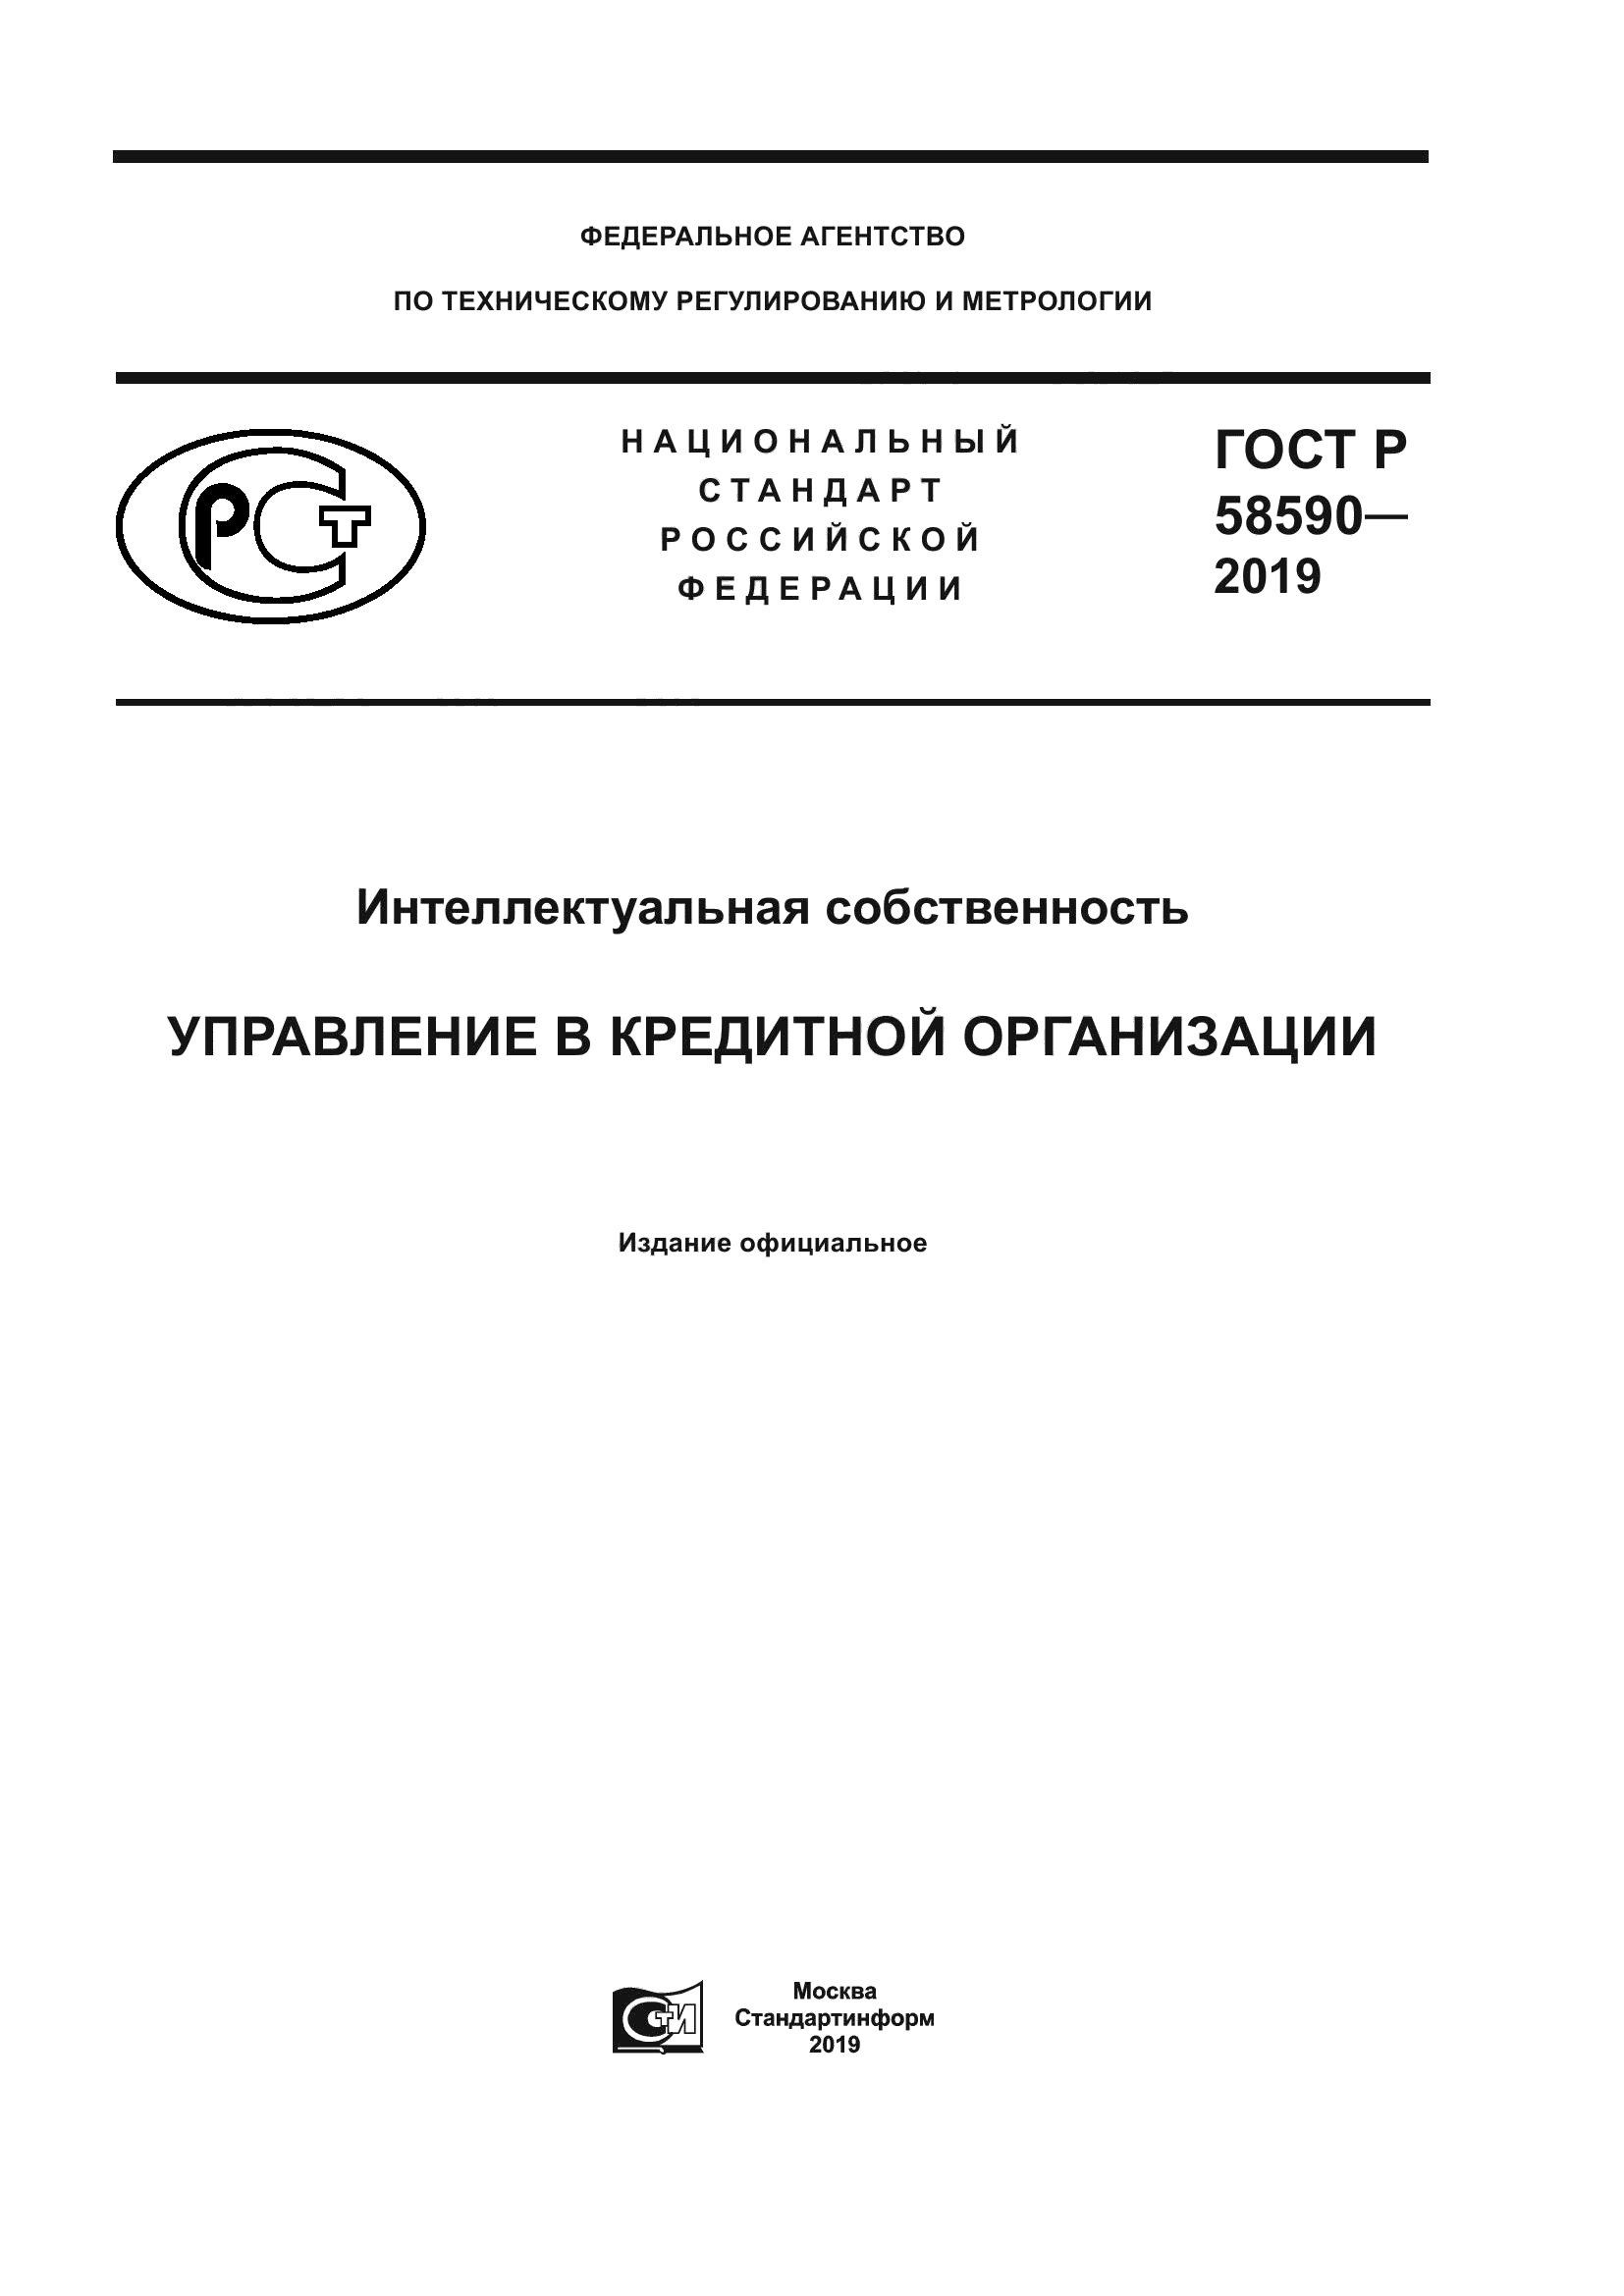 ГОСТ Р 58590-2019